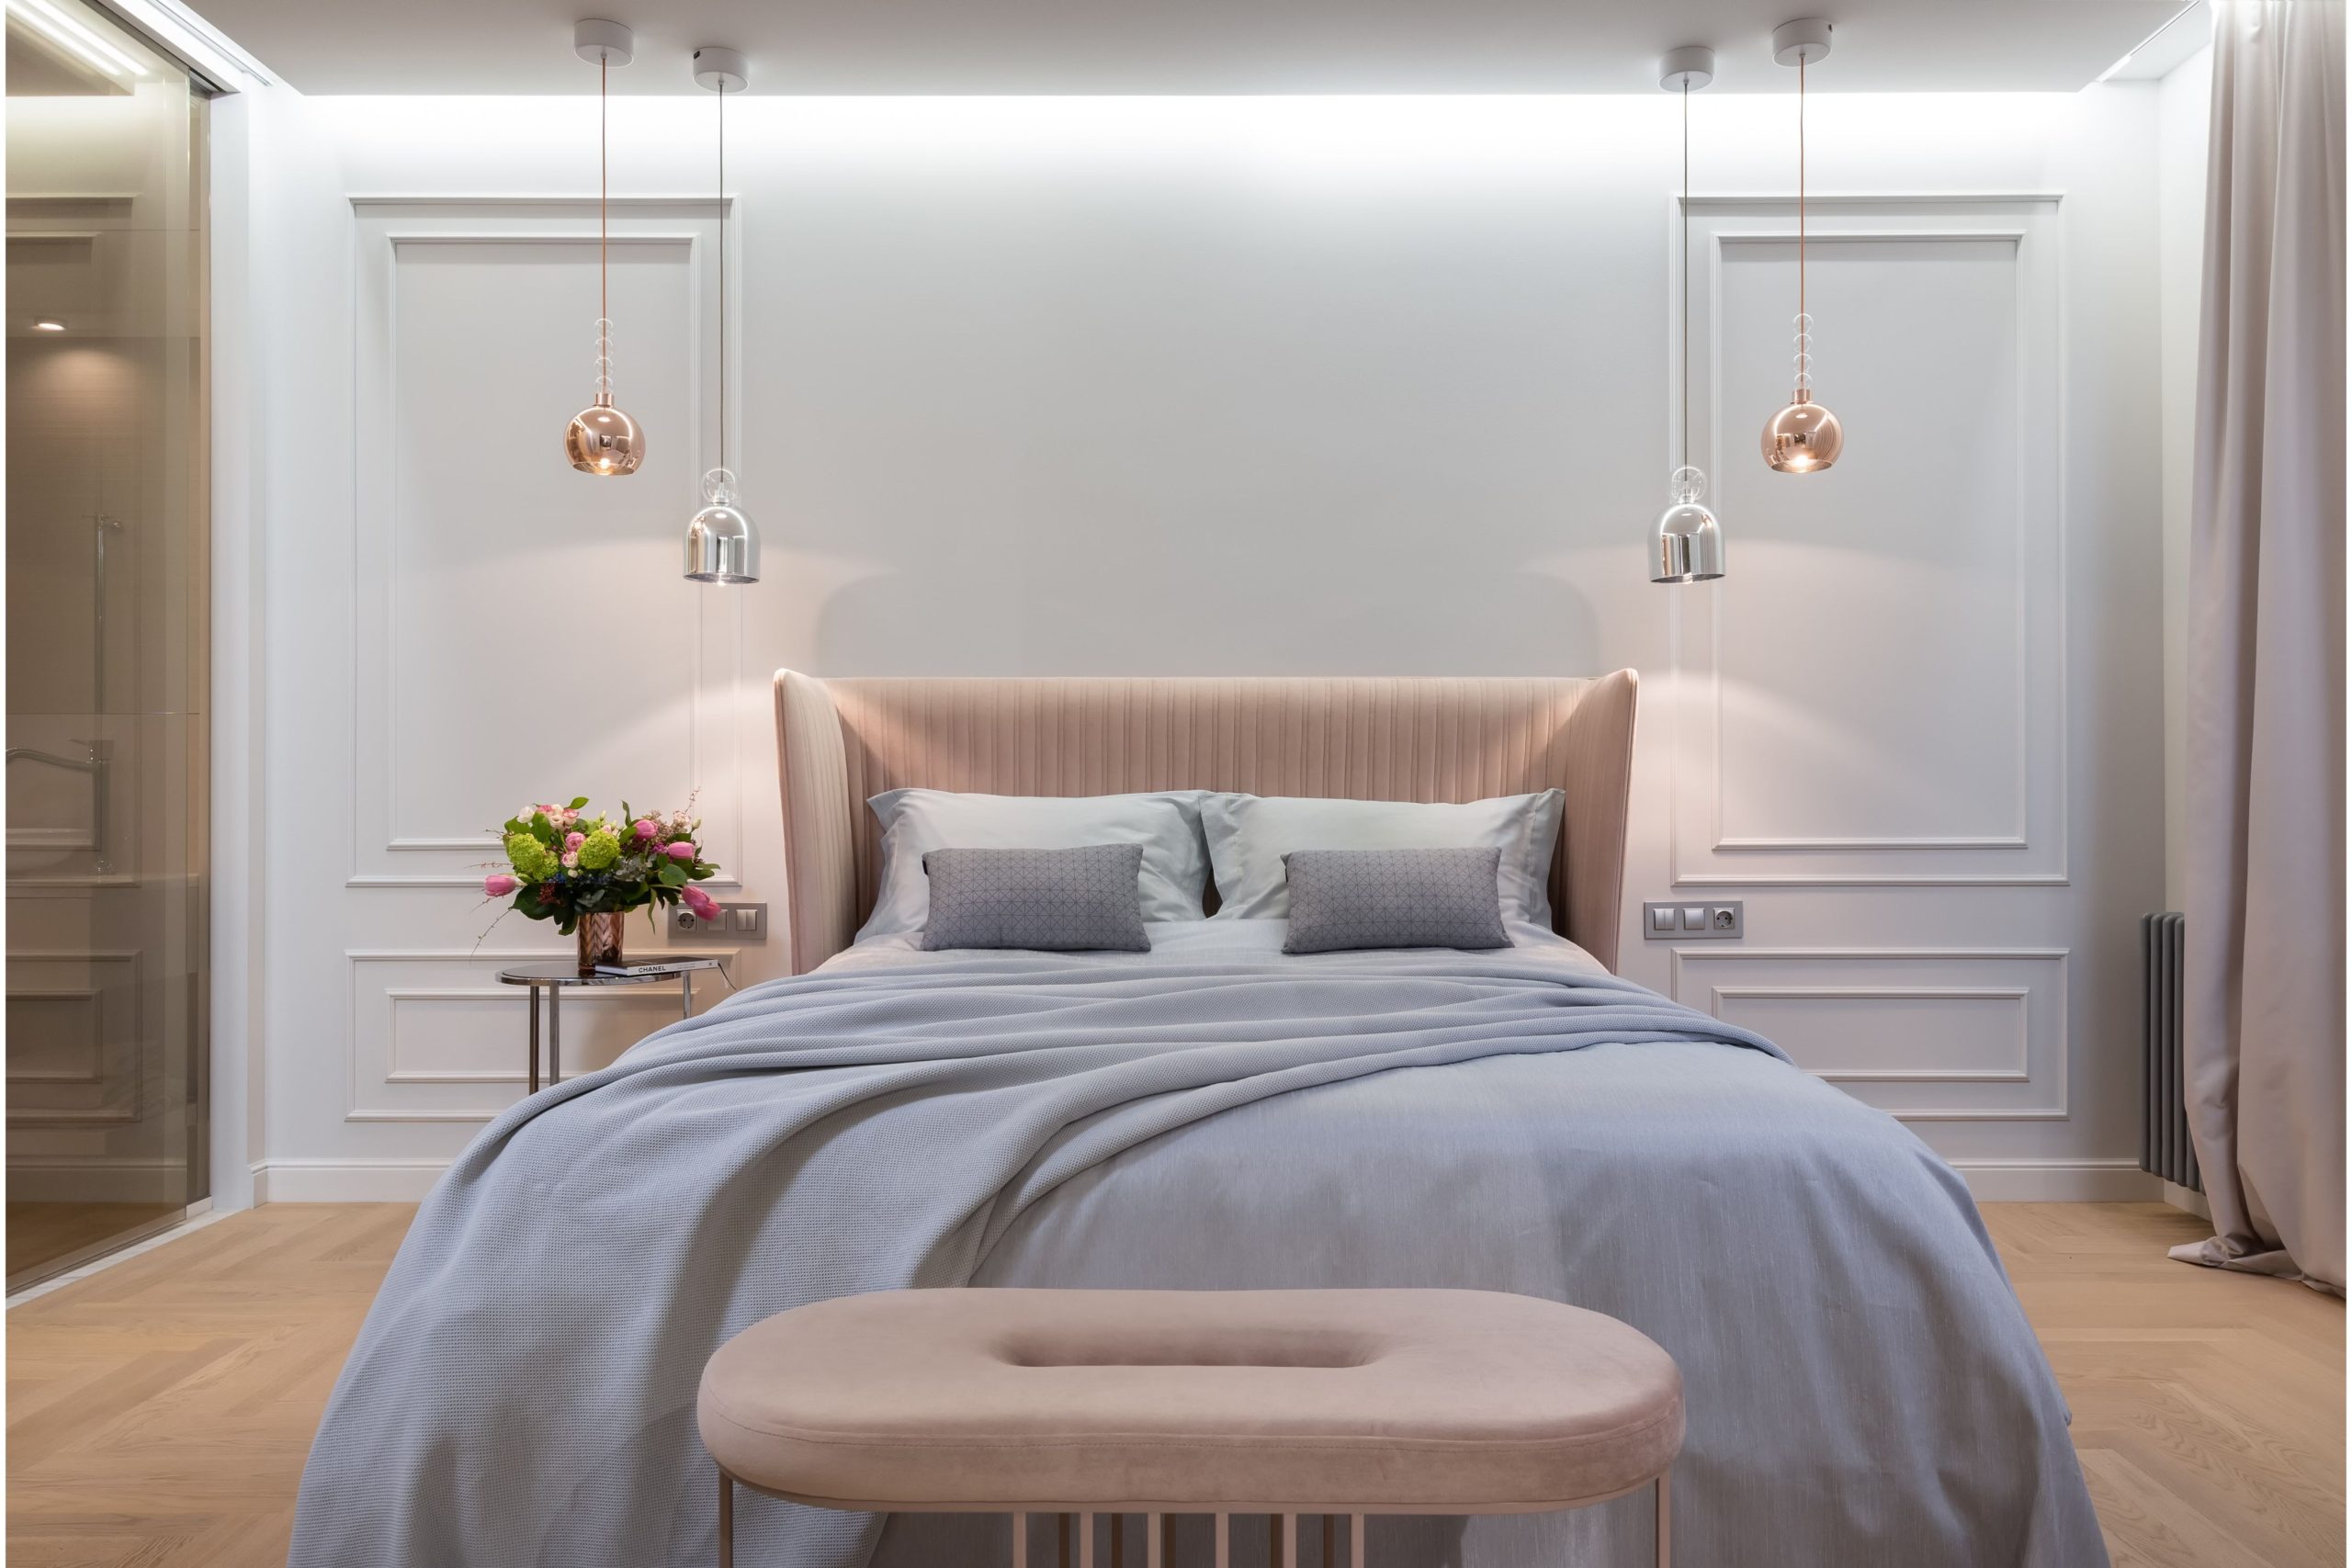 Old-style white modern bedroom villa furniture